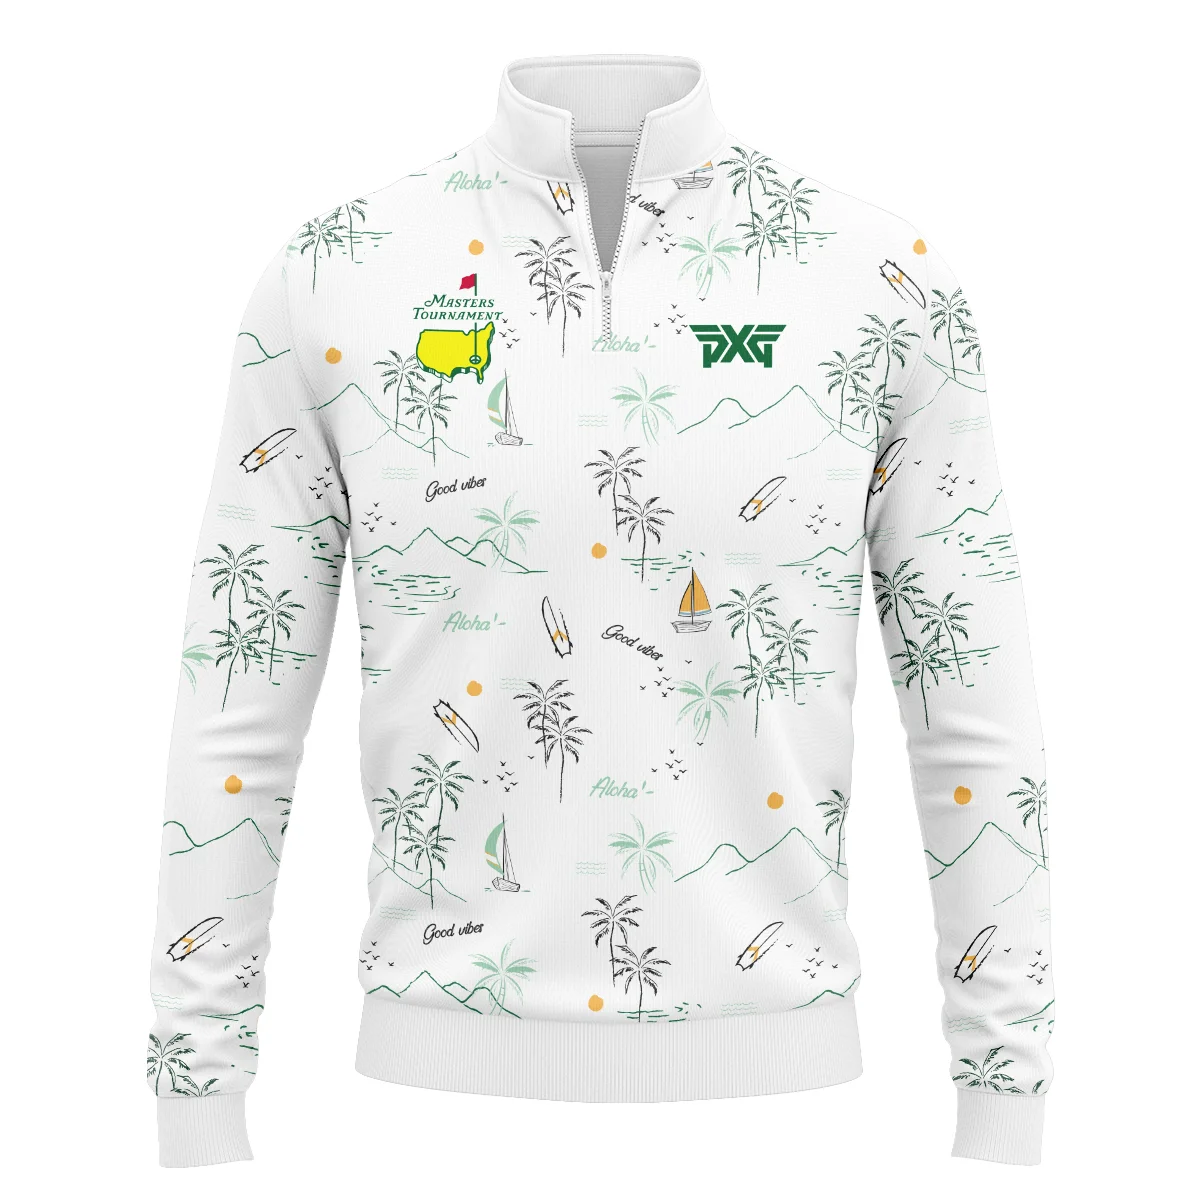 Island Seamless Pattern Golf Masters Tournament Unisex Sweatshirt Style Classic Sweatshirt